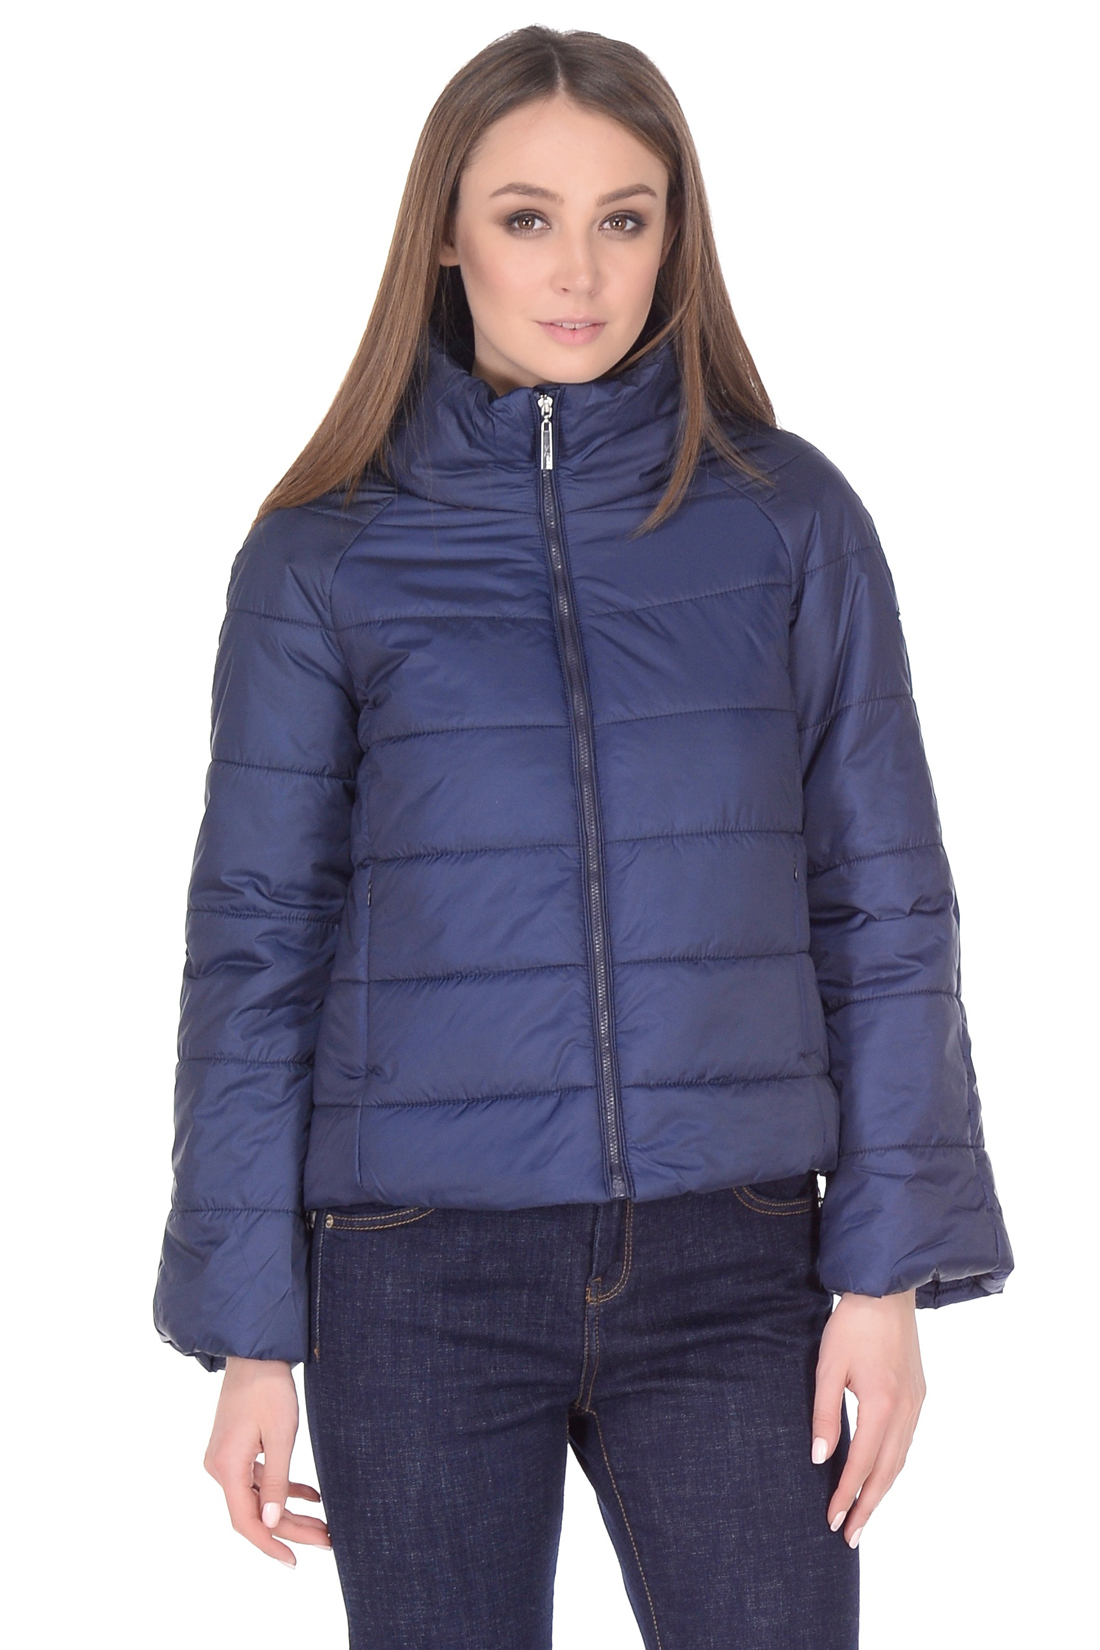 Куртка с рукавами-реглан (арт. baon B038045), размер XS, цвет синий Куртка с рукавами-реглан (арт. baon B038045) - фото 1